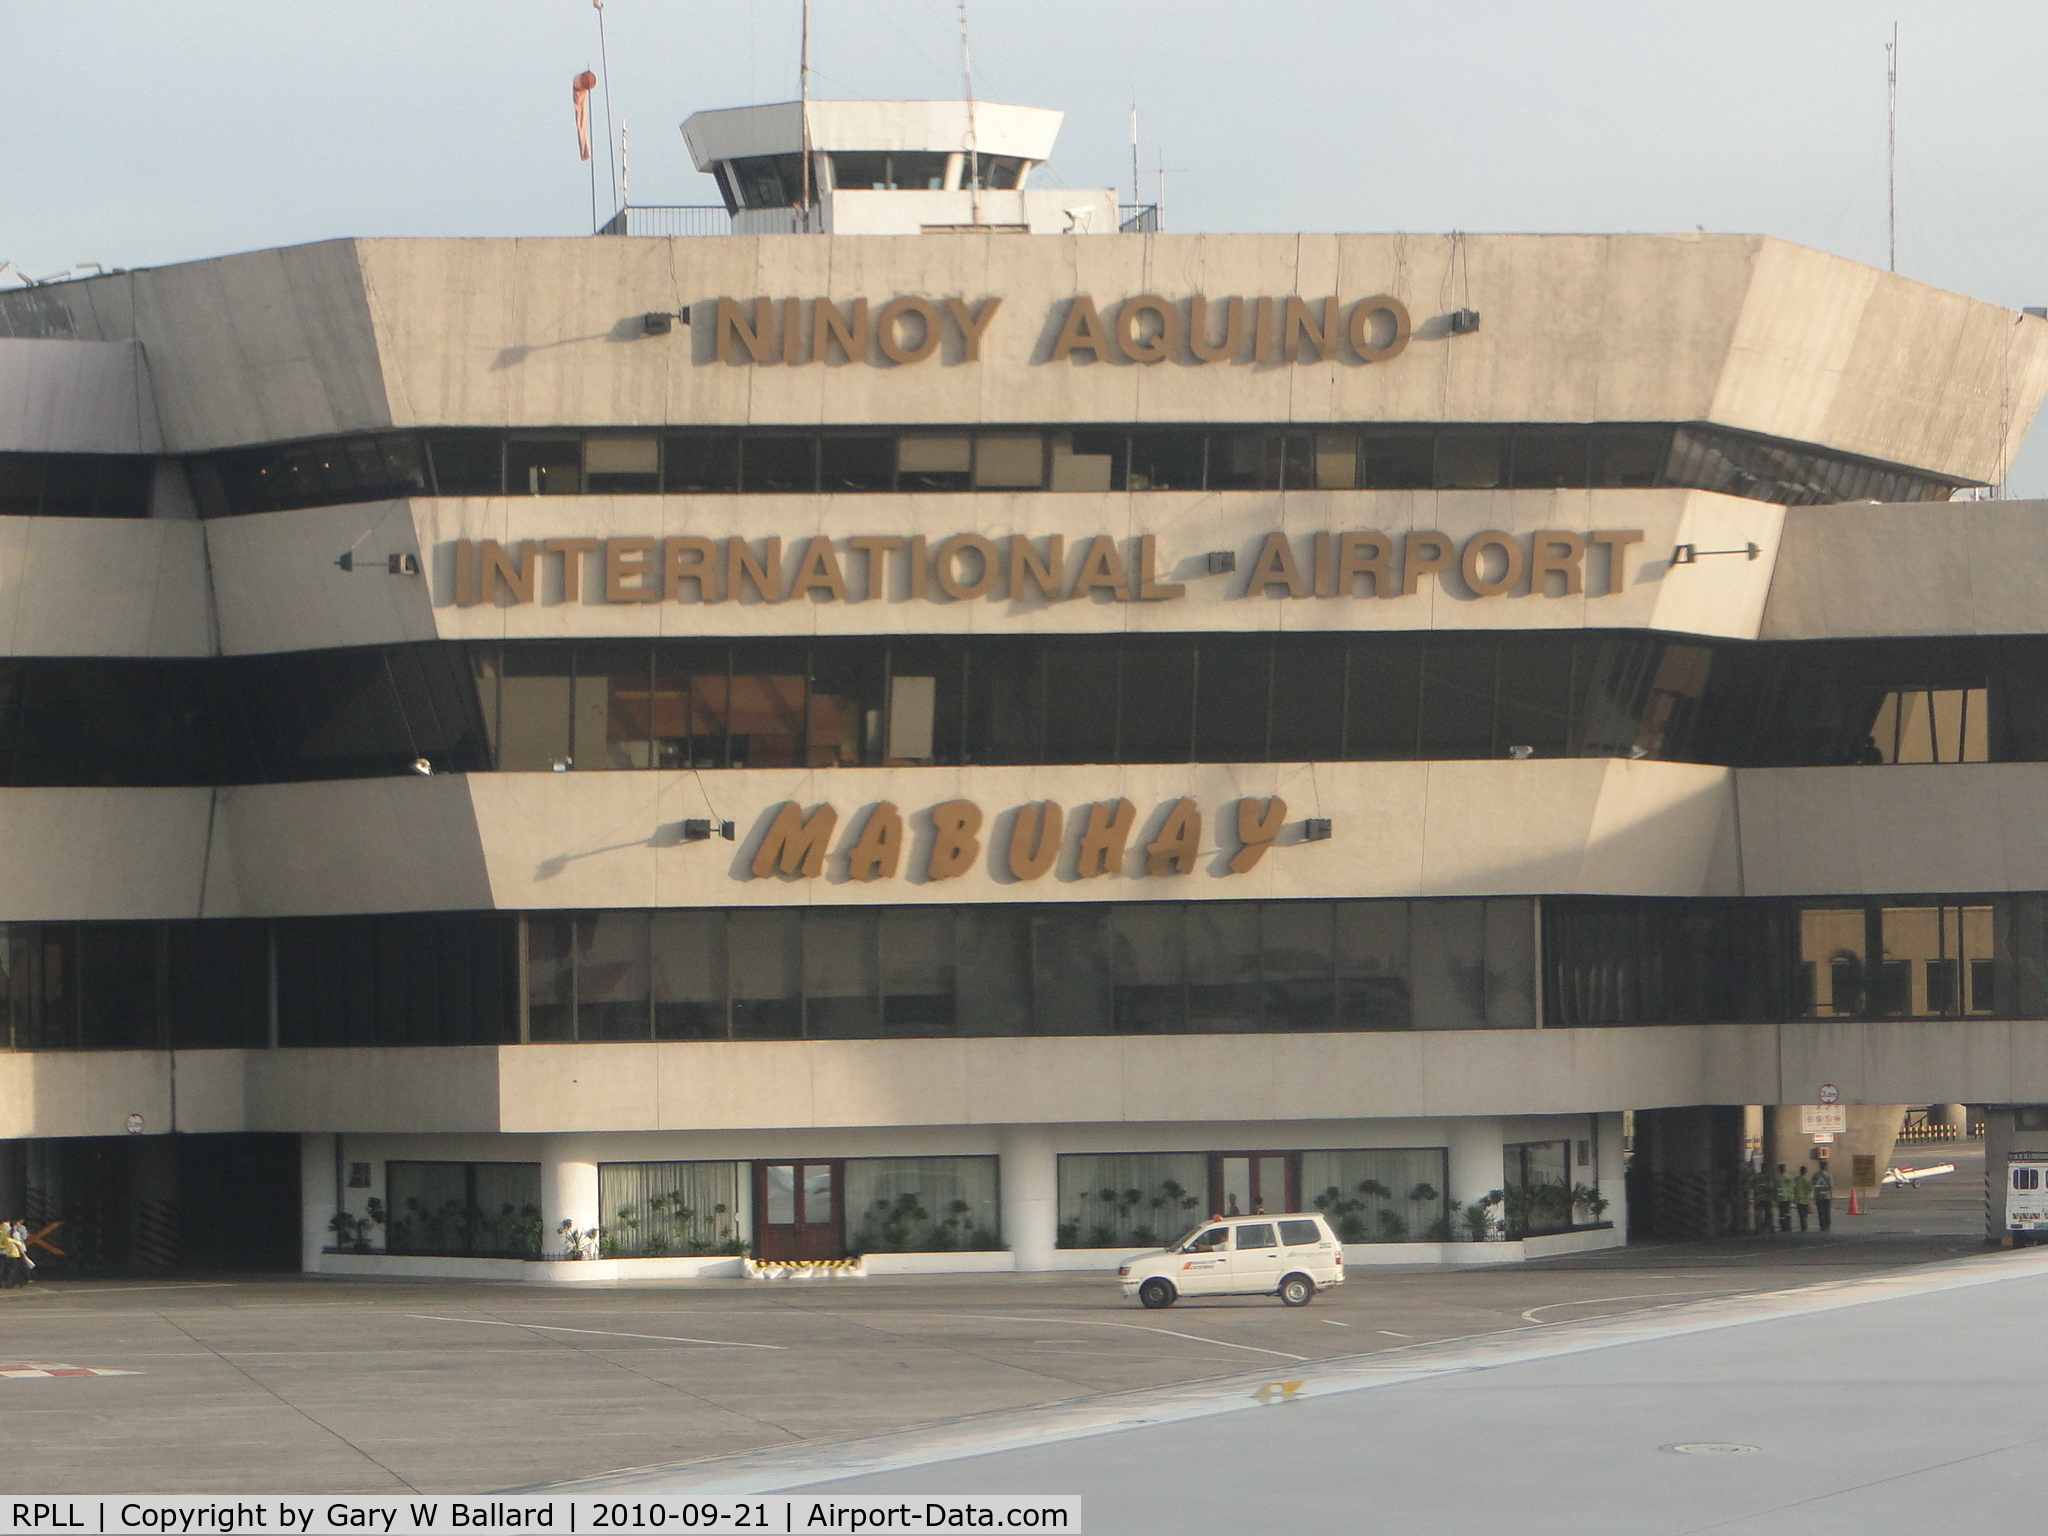 Ninoy Aquino International Airport, Manila Philippines (RPLL) - Terminal 1 as seen from Delta flight No.629 Manila - Nagoya - Detroit. Gary W Ballard photo Sept. 2010